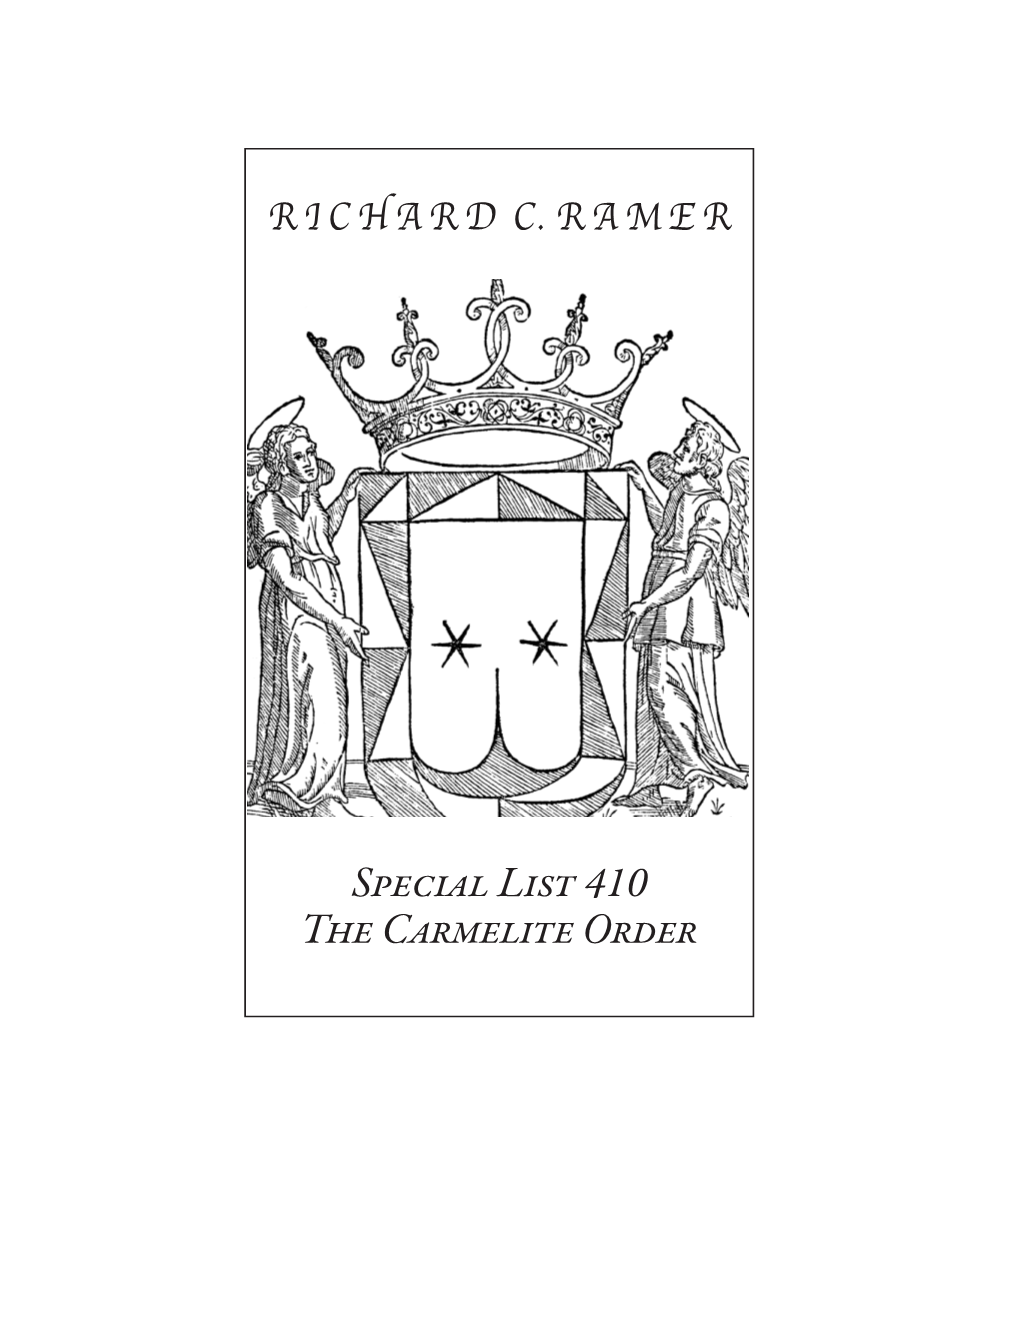 Special List 410: the Carmelite Order